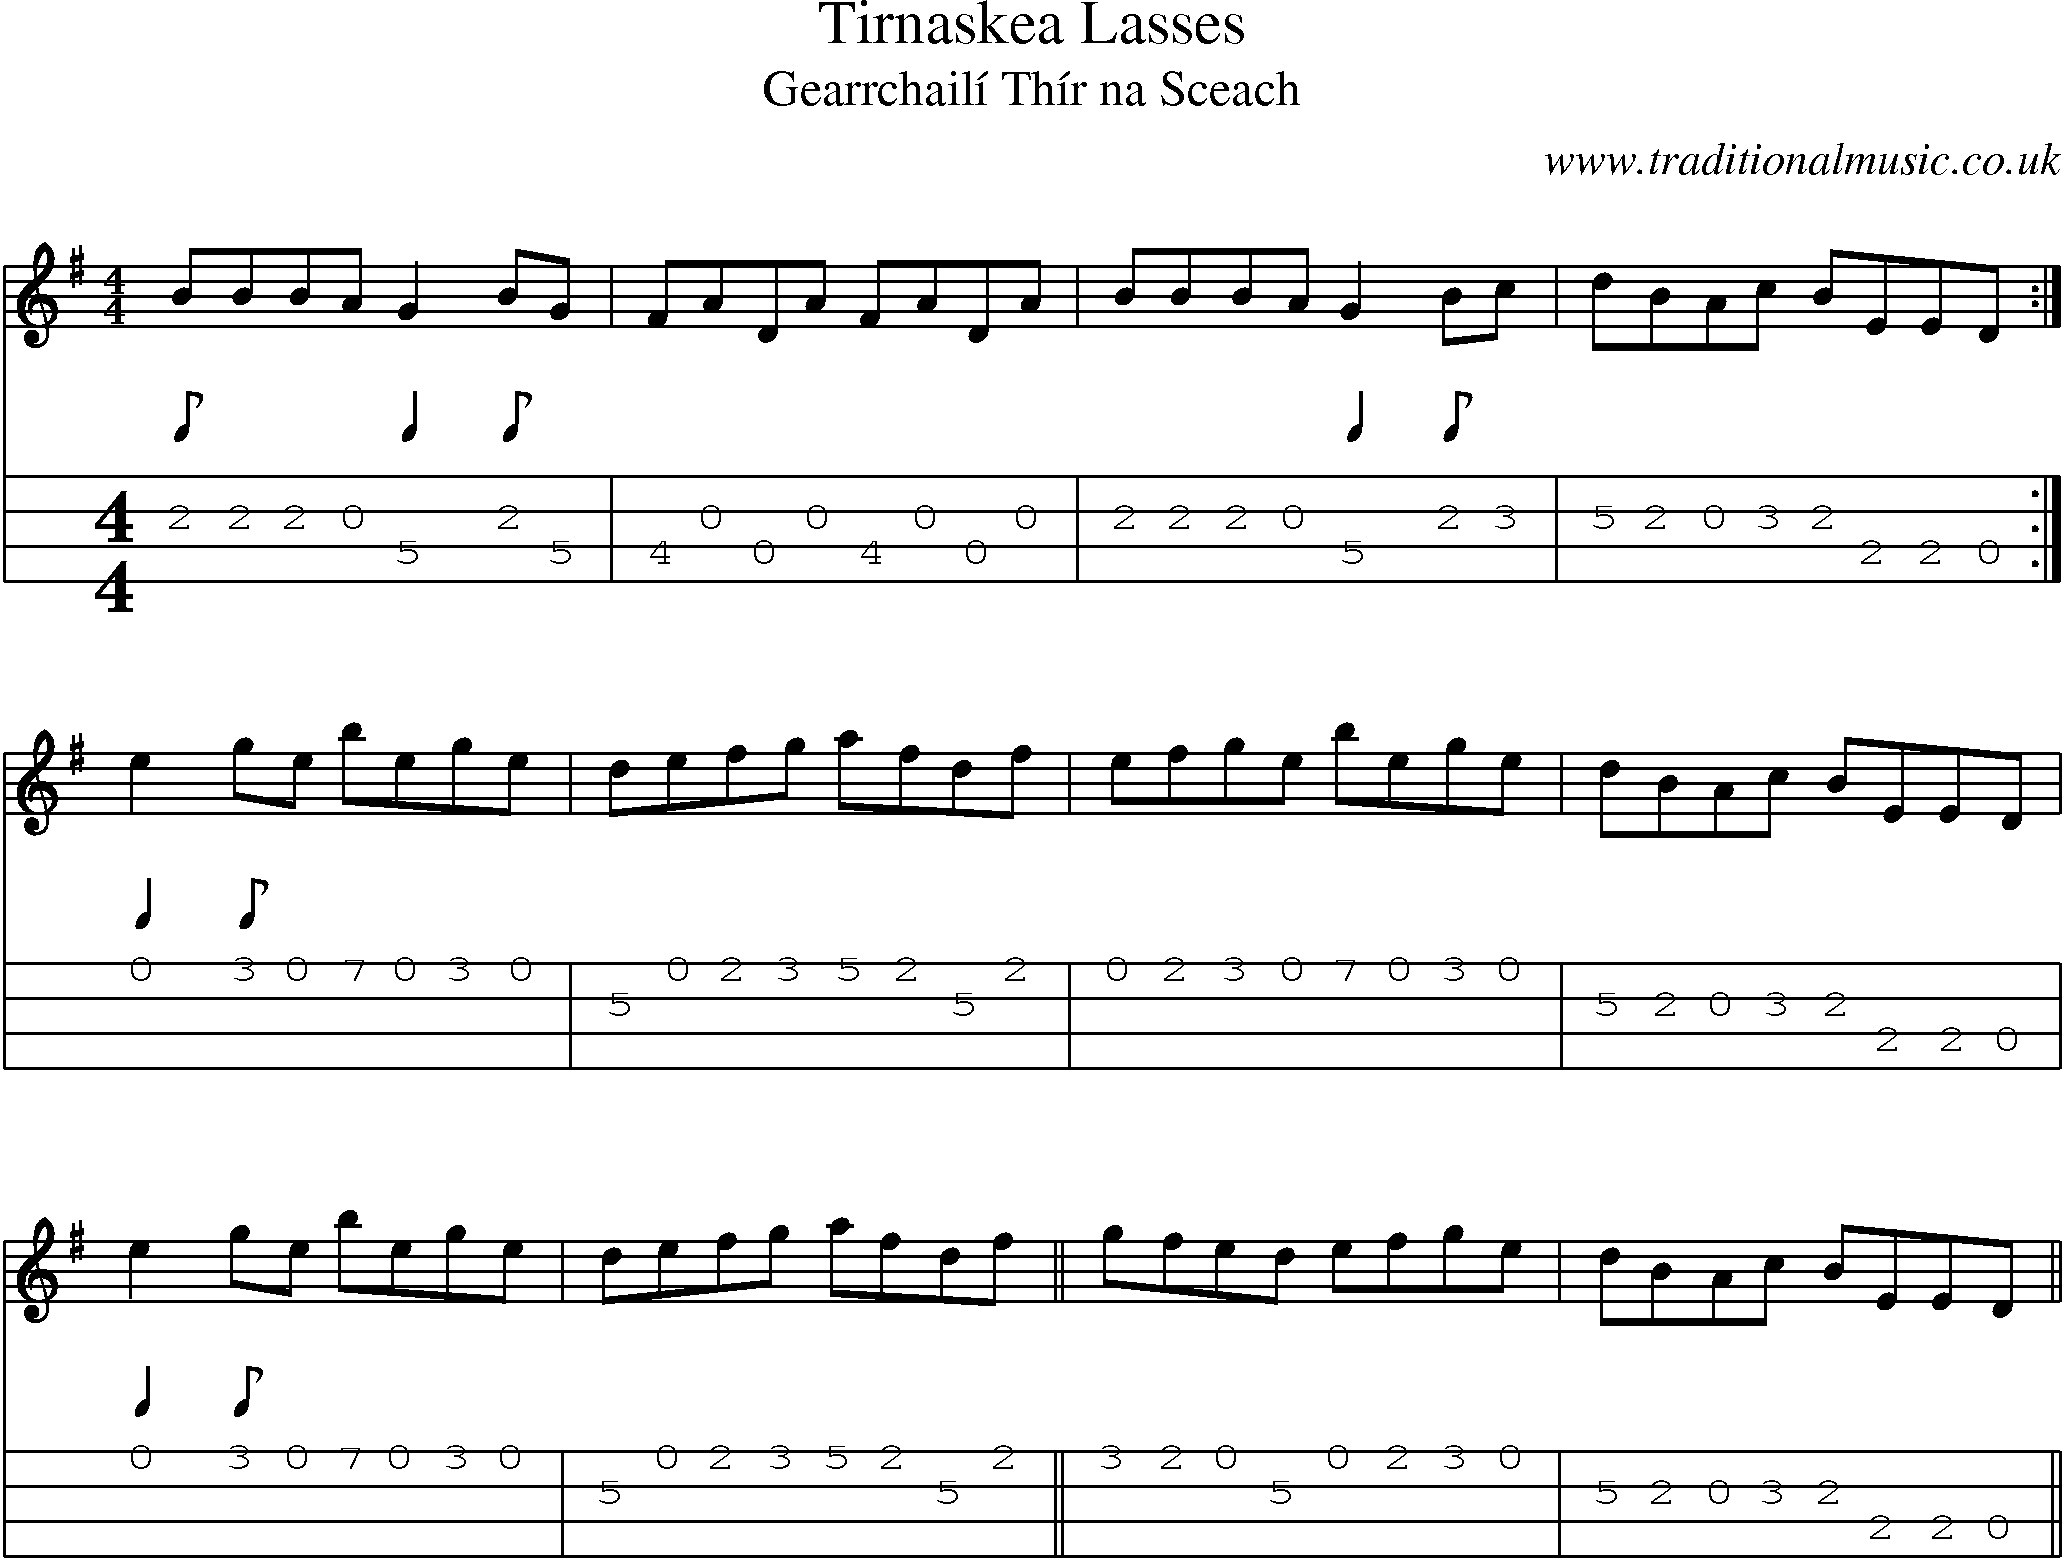 Music Score and Mandolin Tabs for Tirnaskea Lasses